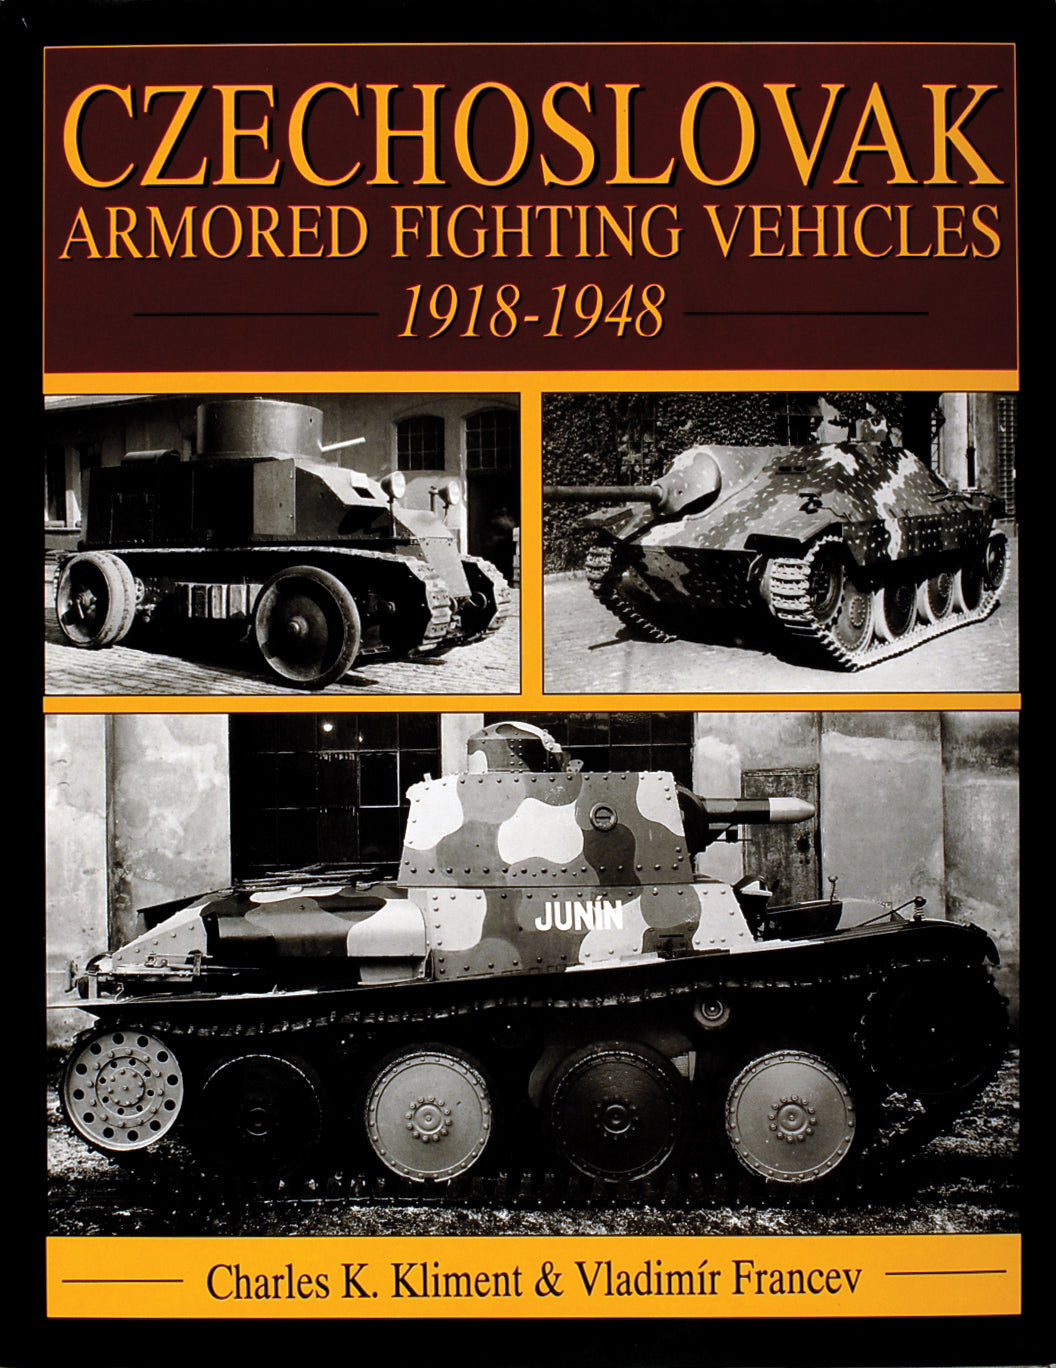 Czechoslovak Armored Fighting Vehicles 1918-1948